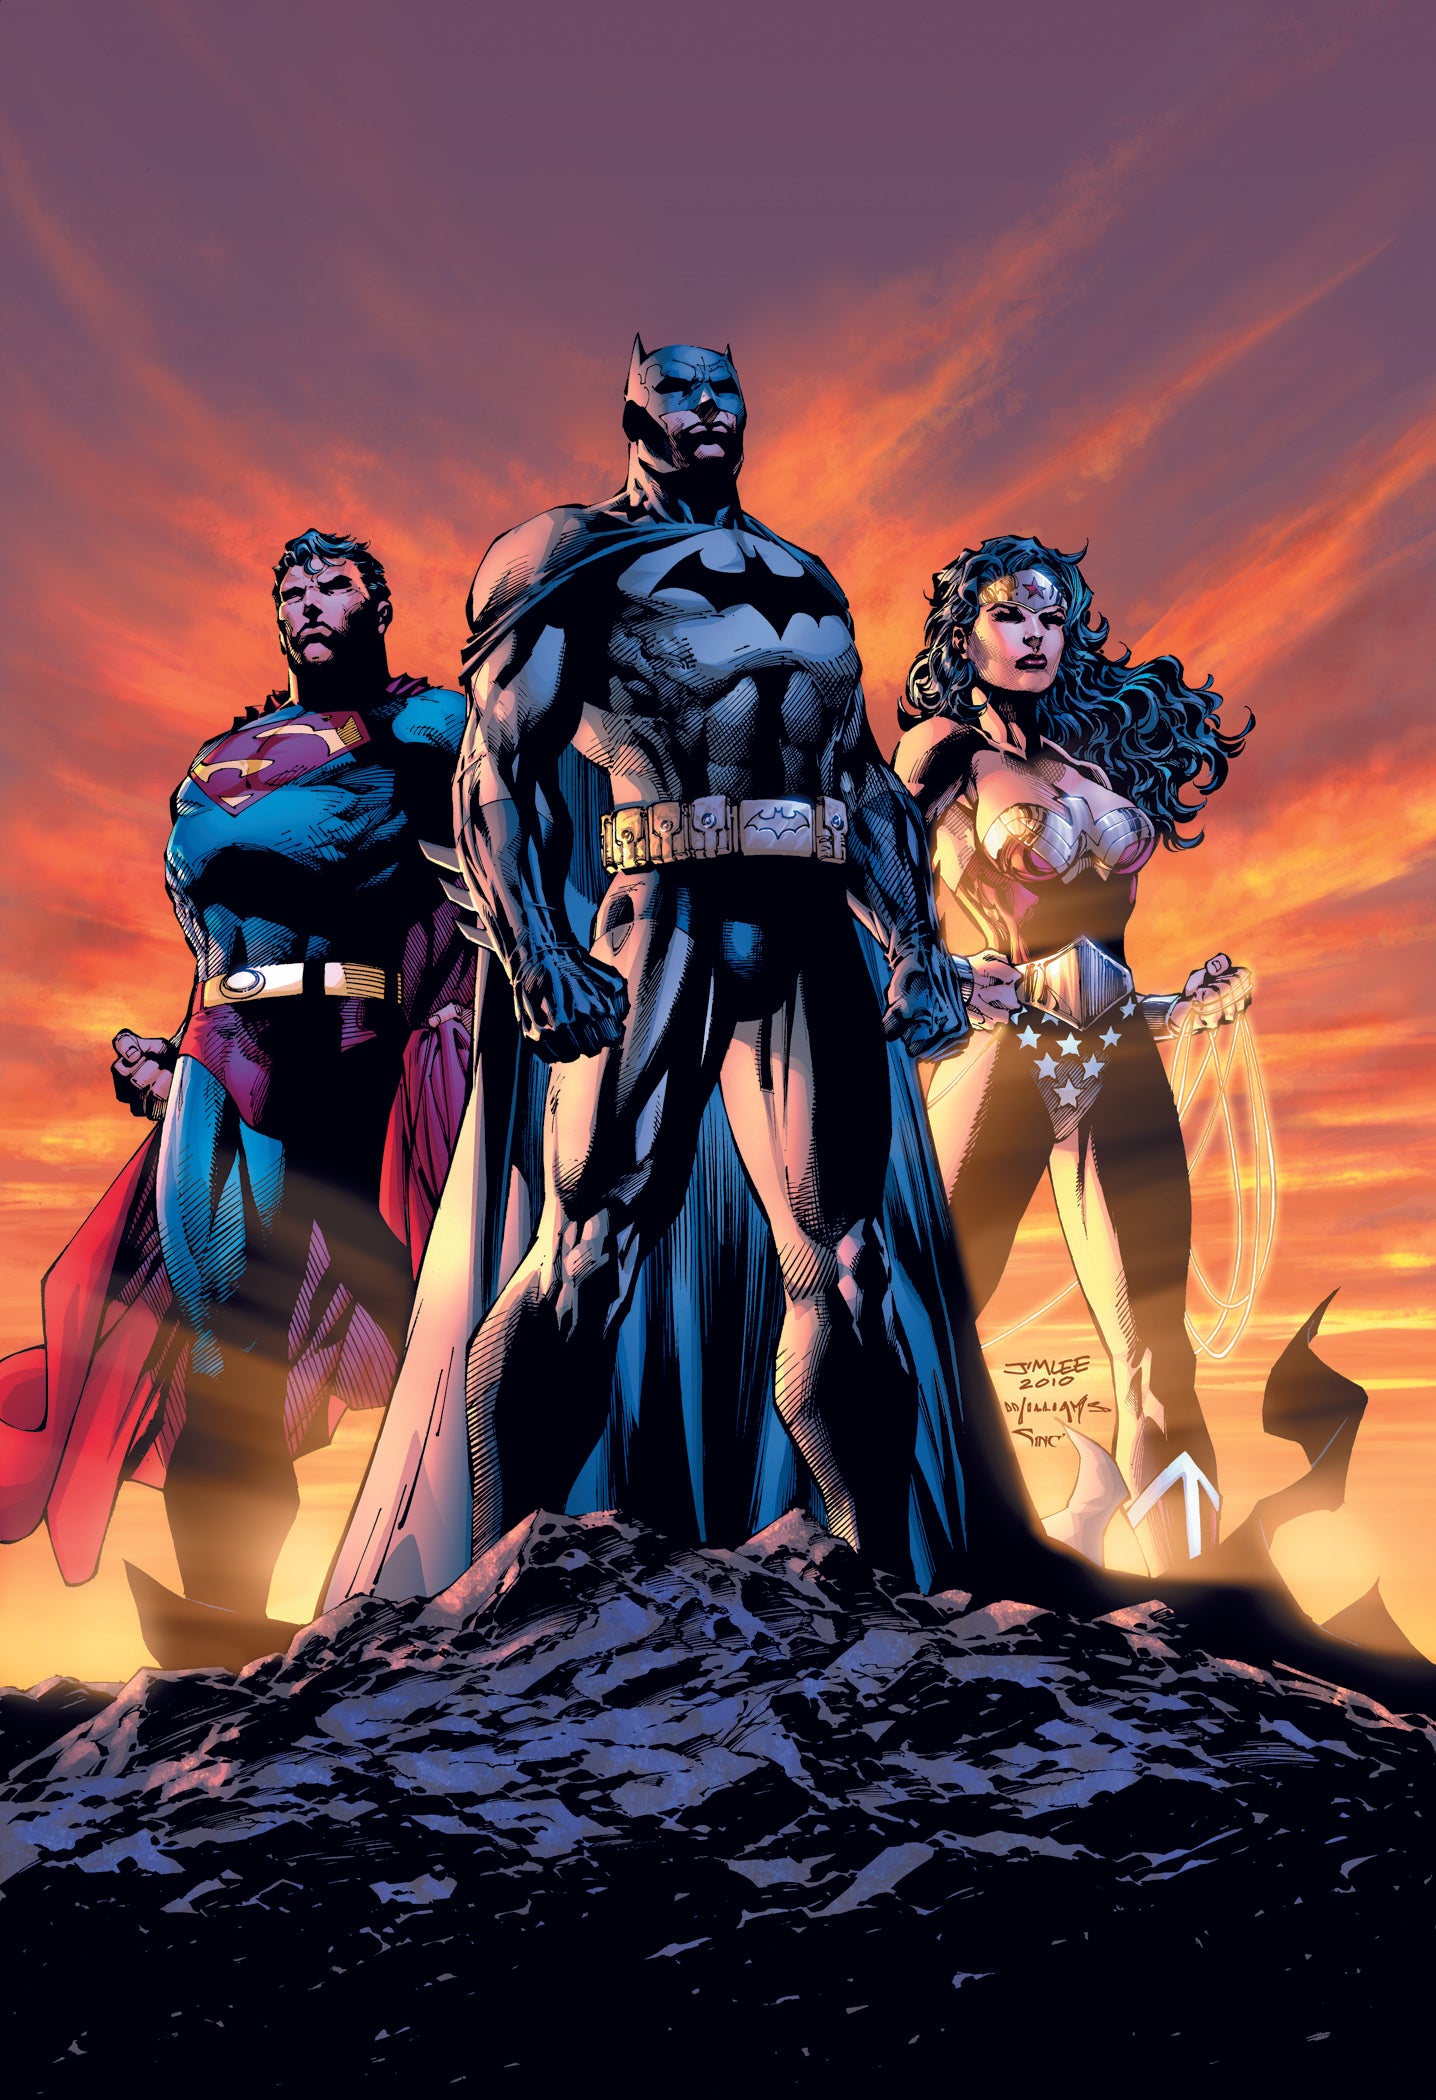 art illustration of Batman, Superman and Wonder Woma